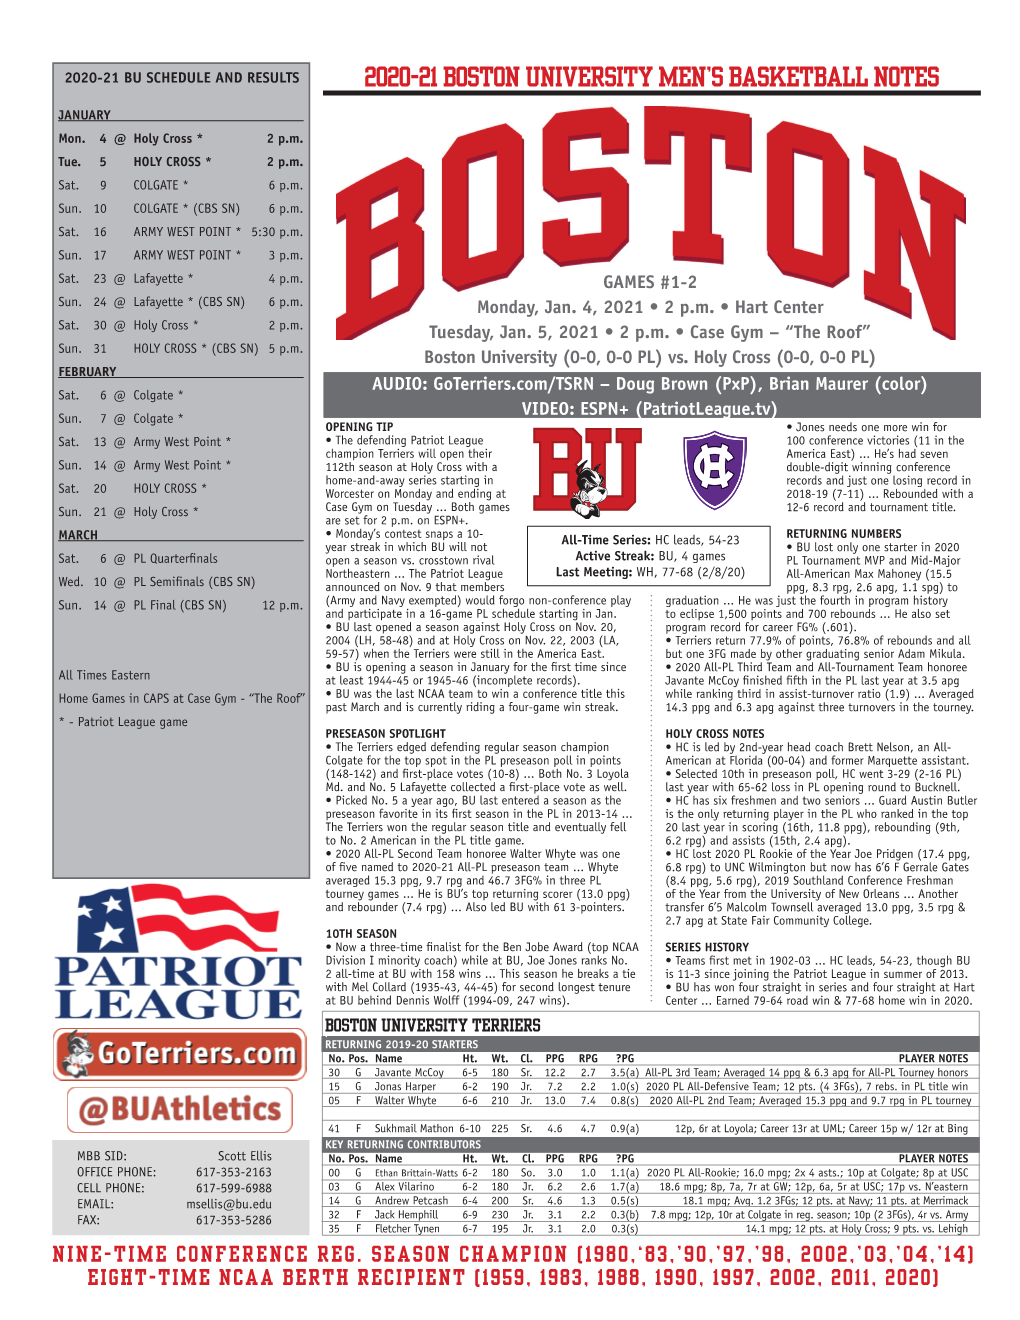 2020-21 Boston University Men's Basketball Notes